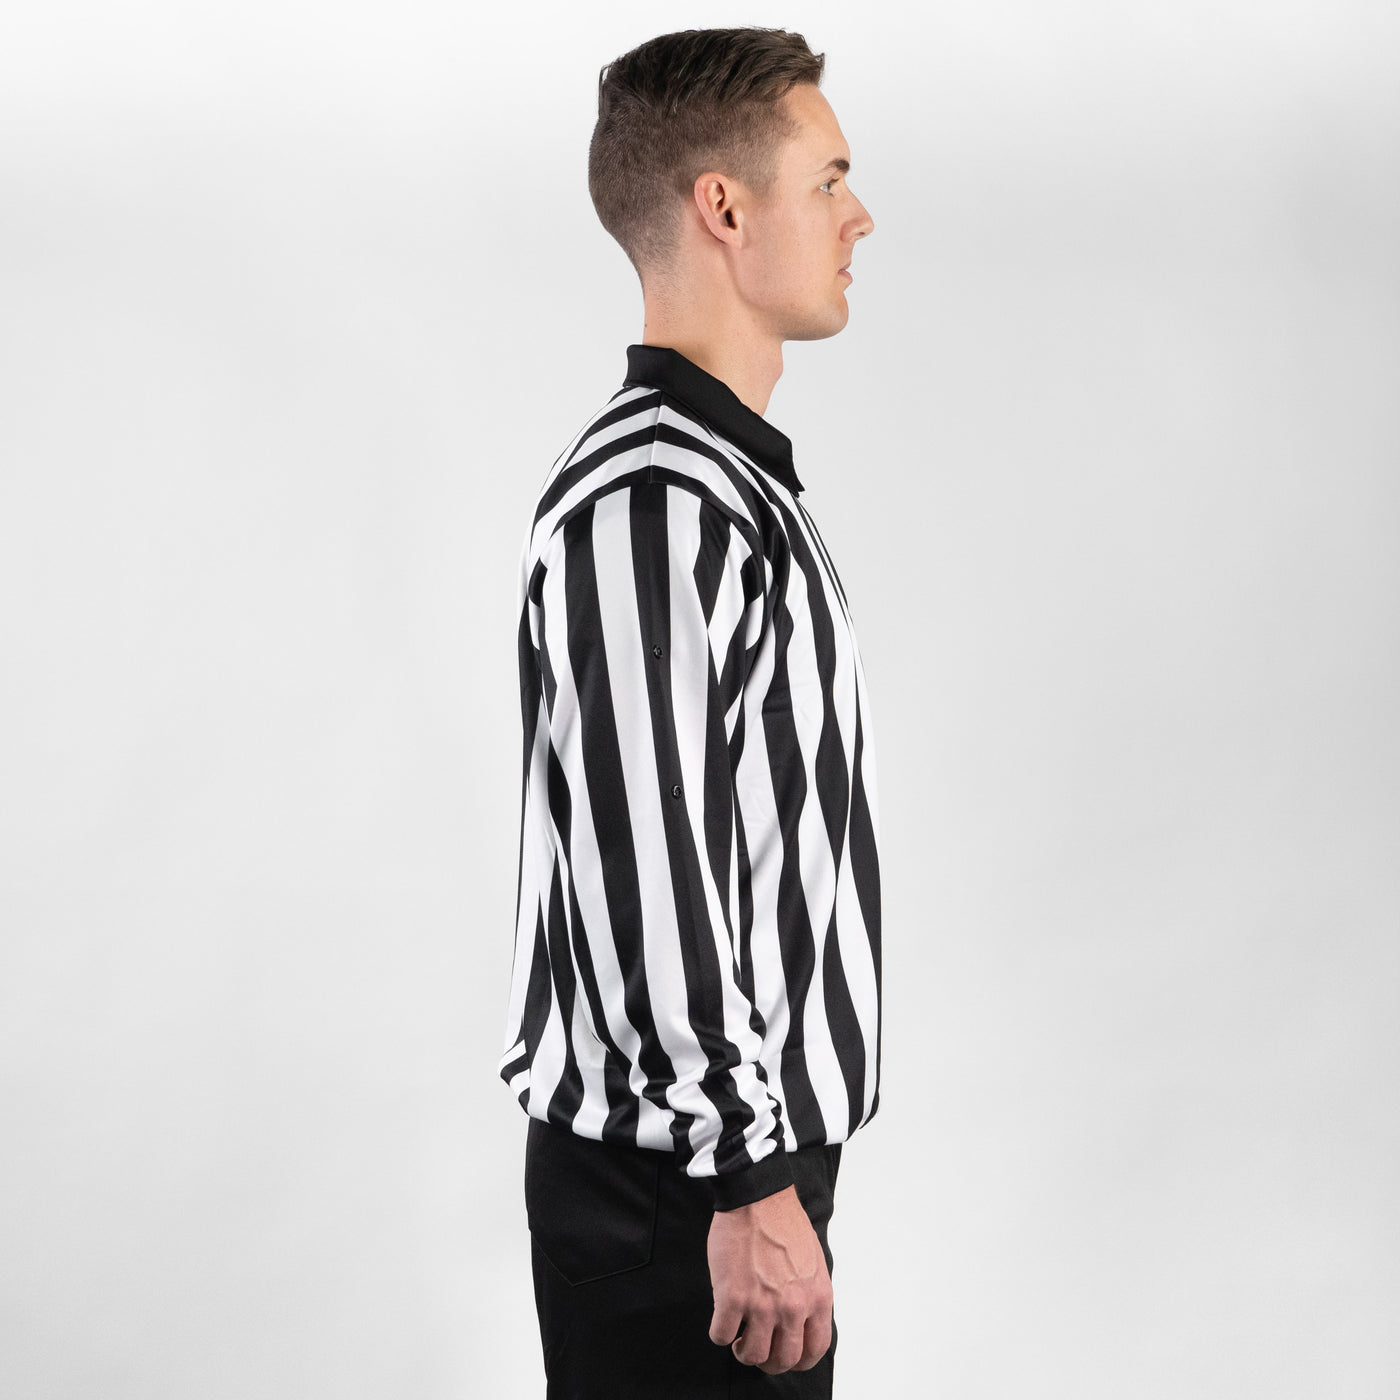 Zebrasclub ZL1 hockey referee jersey with snaps side view